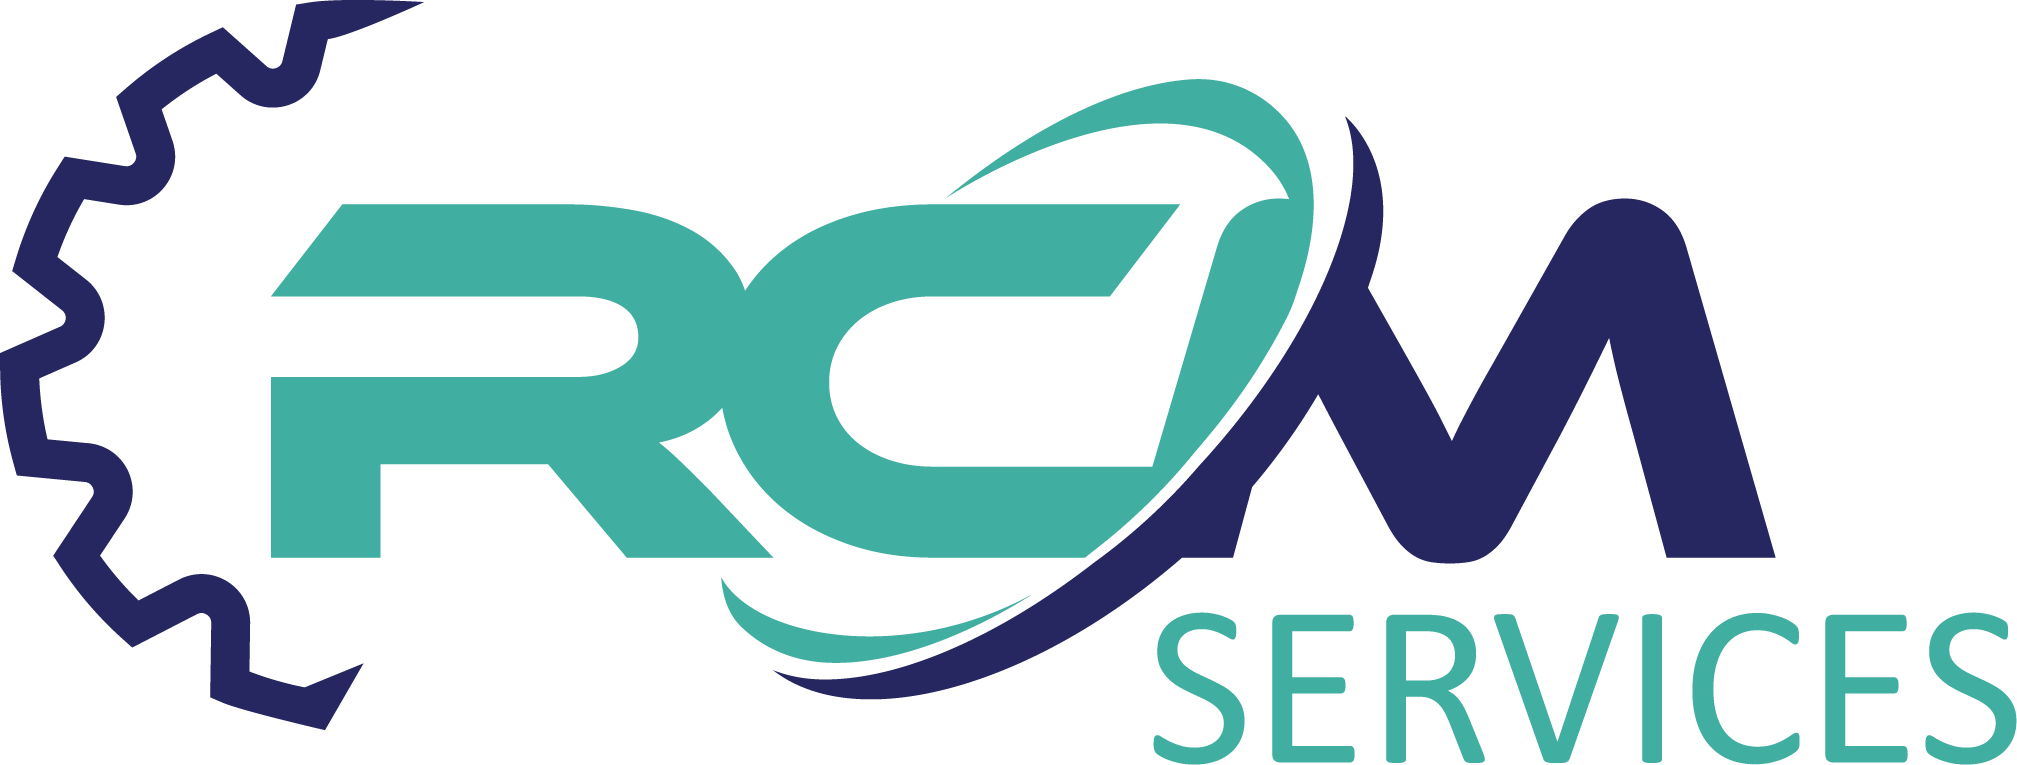 Rcm Logo Vector | 3dhometours.info